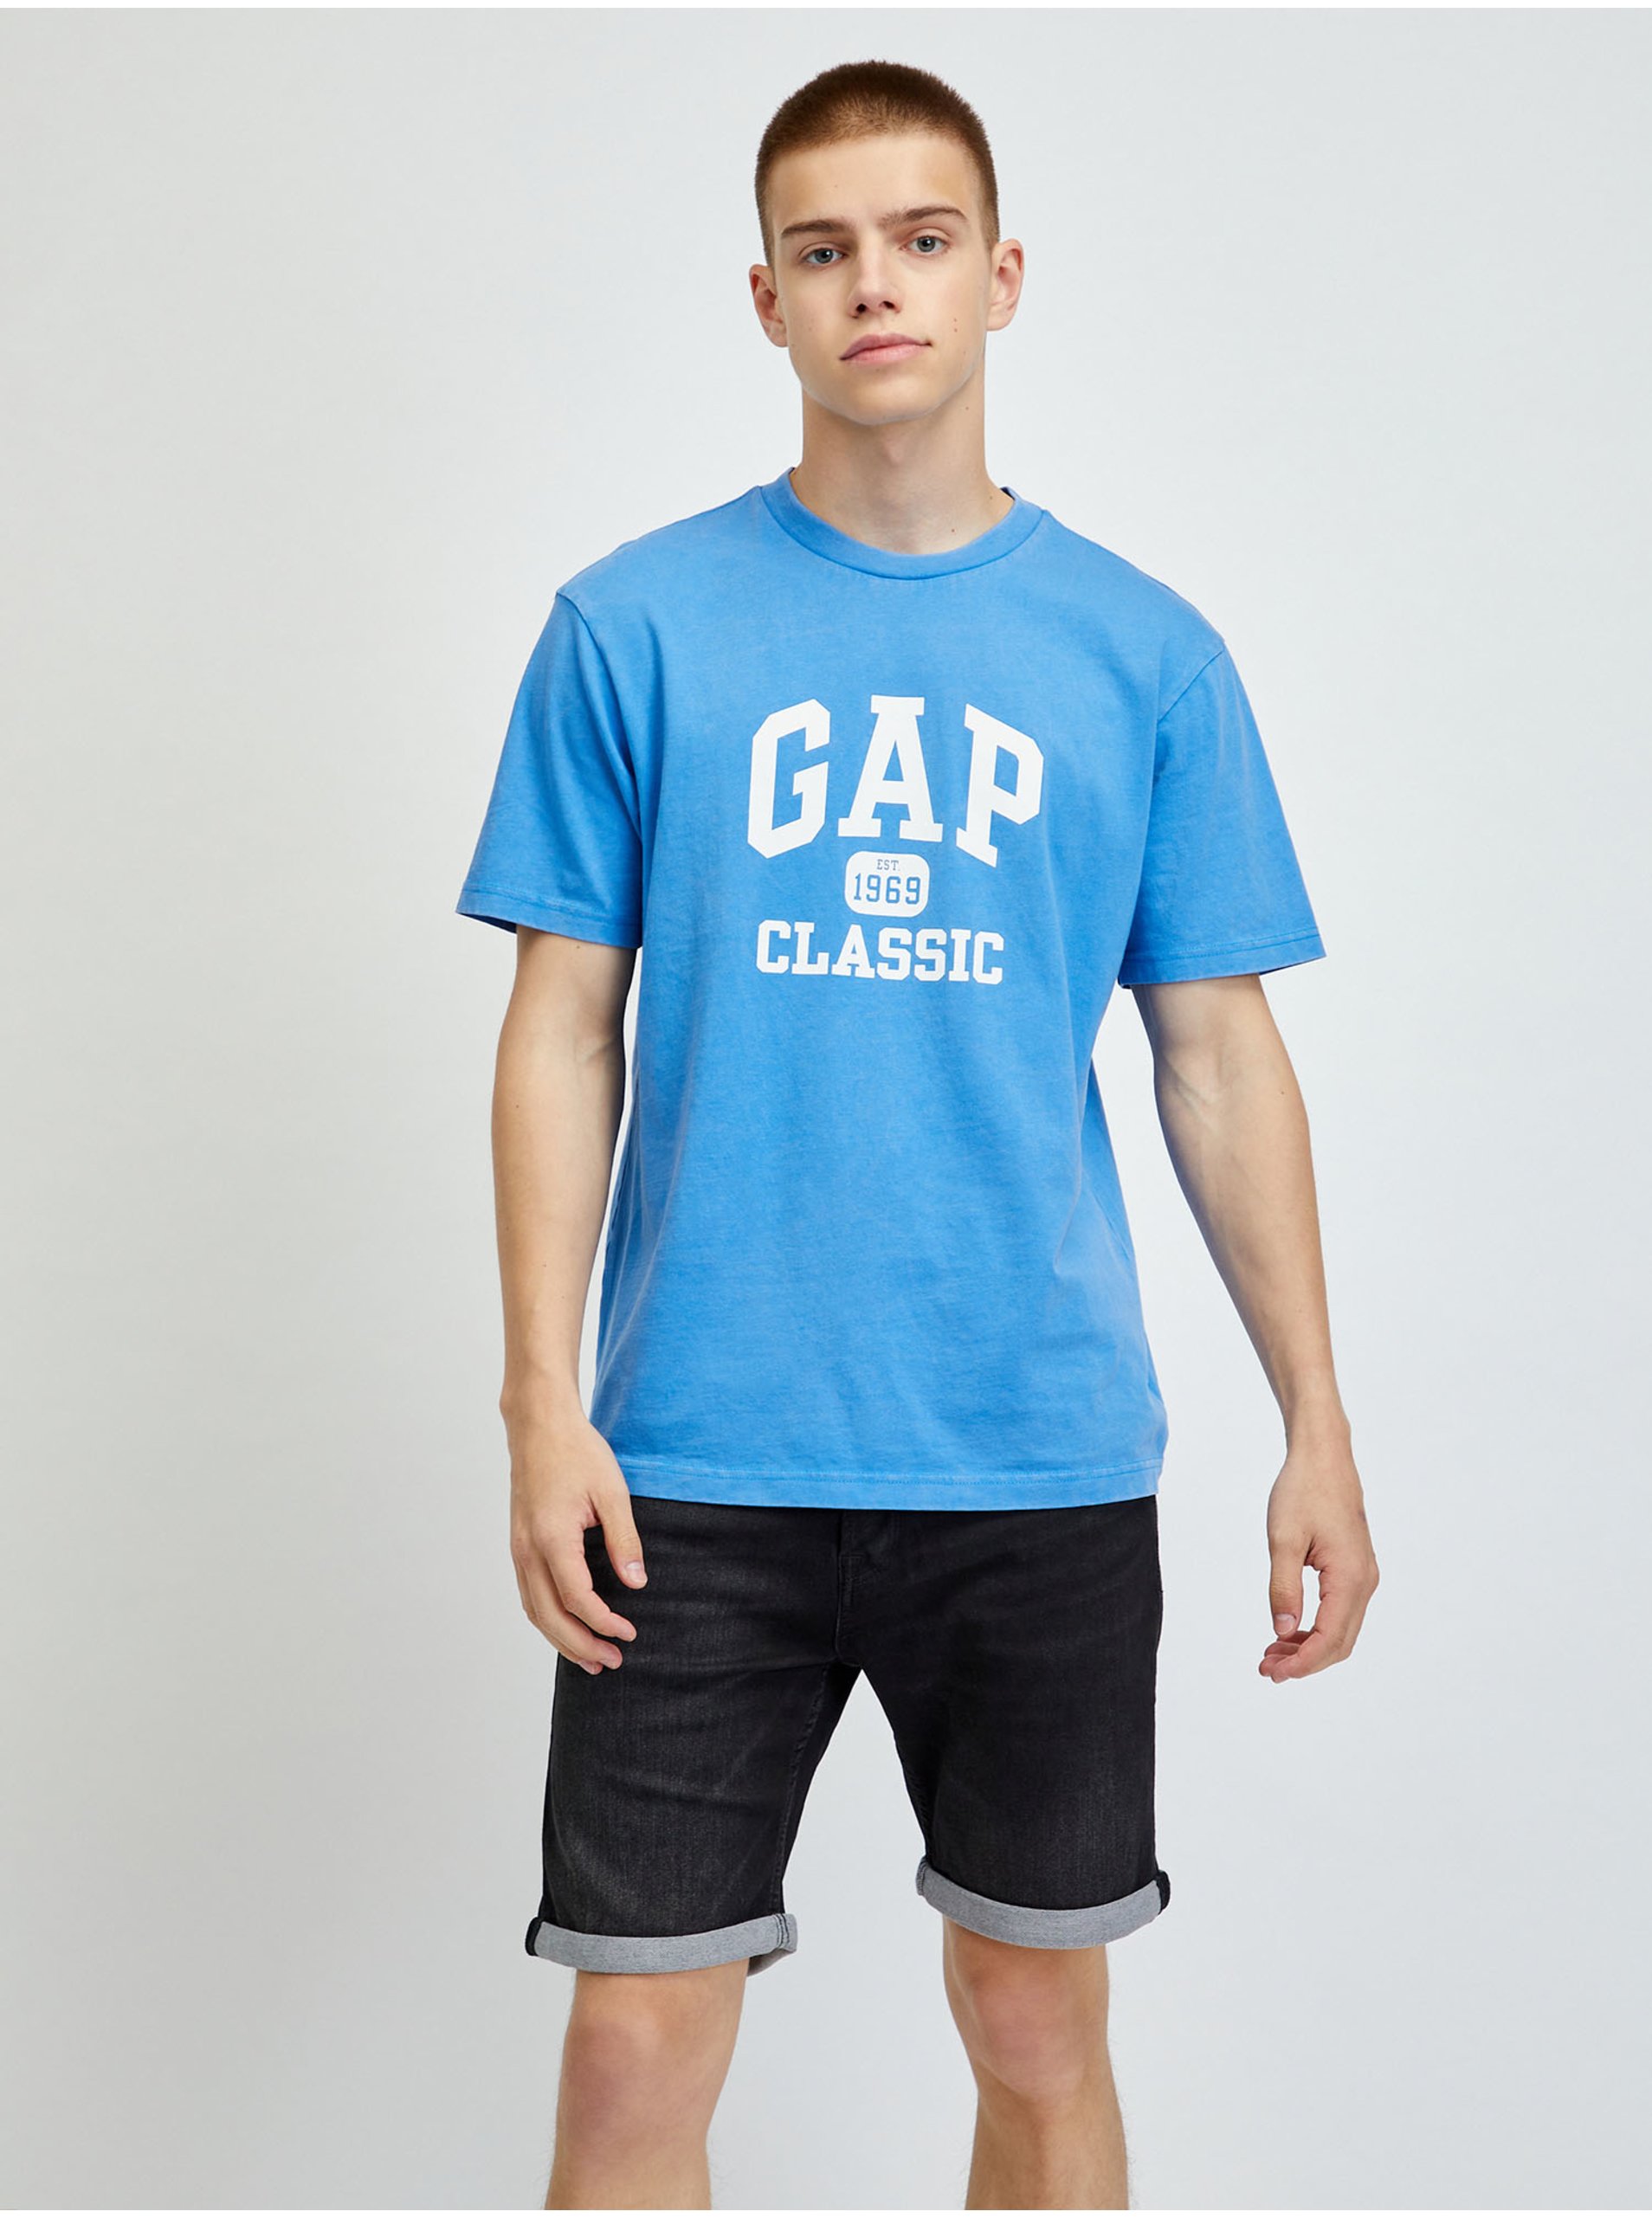 Lacno Modré pánske tričko logo GAP 1969 Classic organic